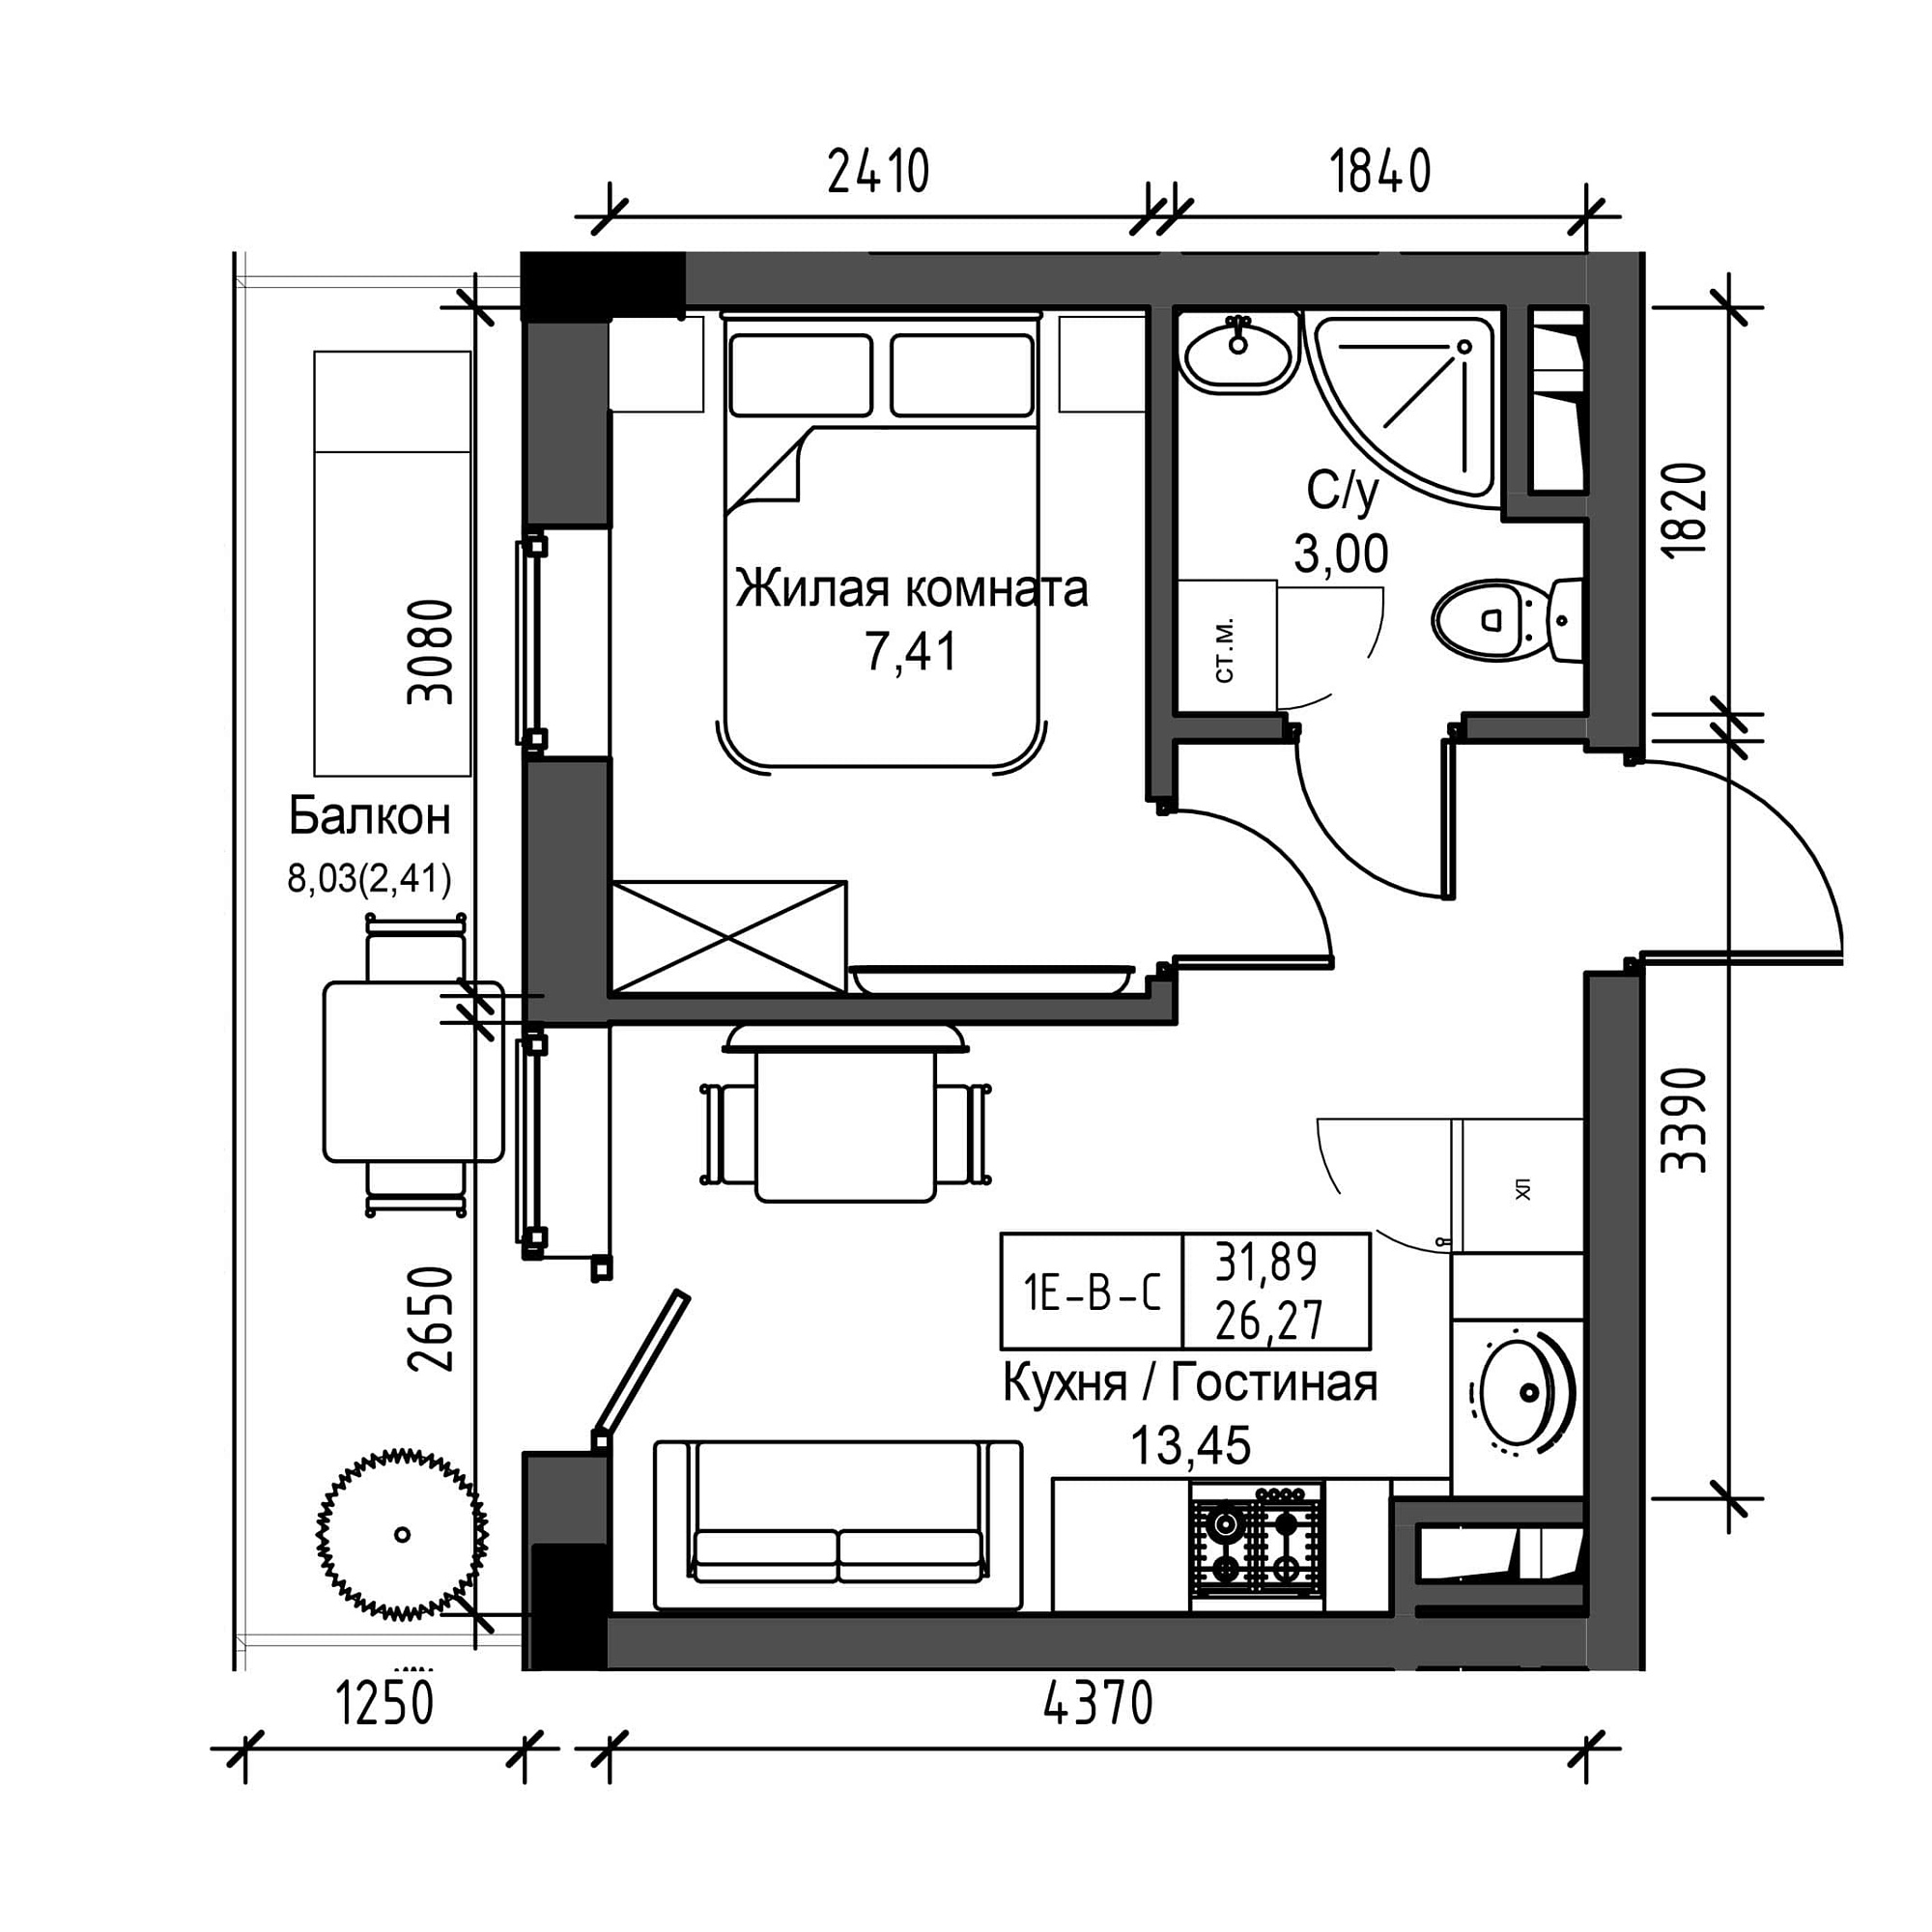 Planning 1-rm flats area 26.27m2, UM-001-08/0015.